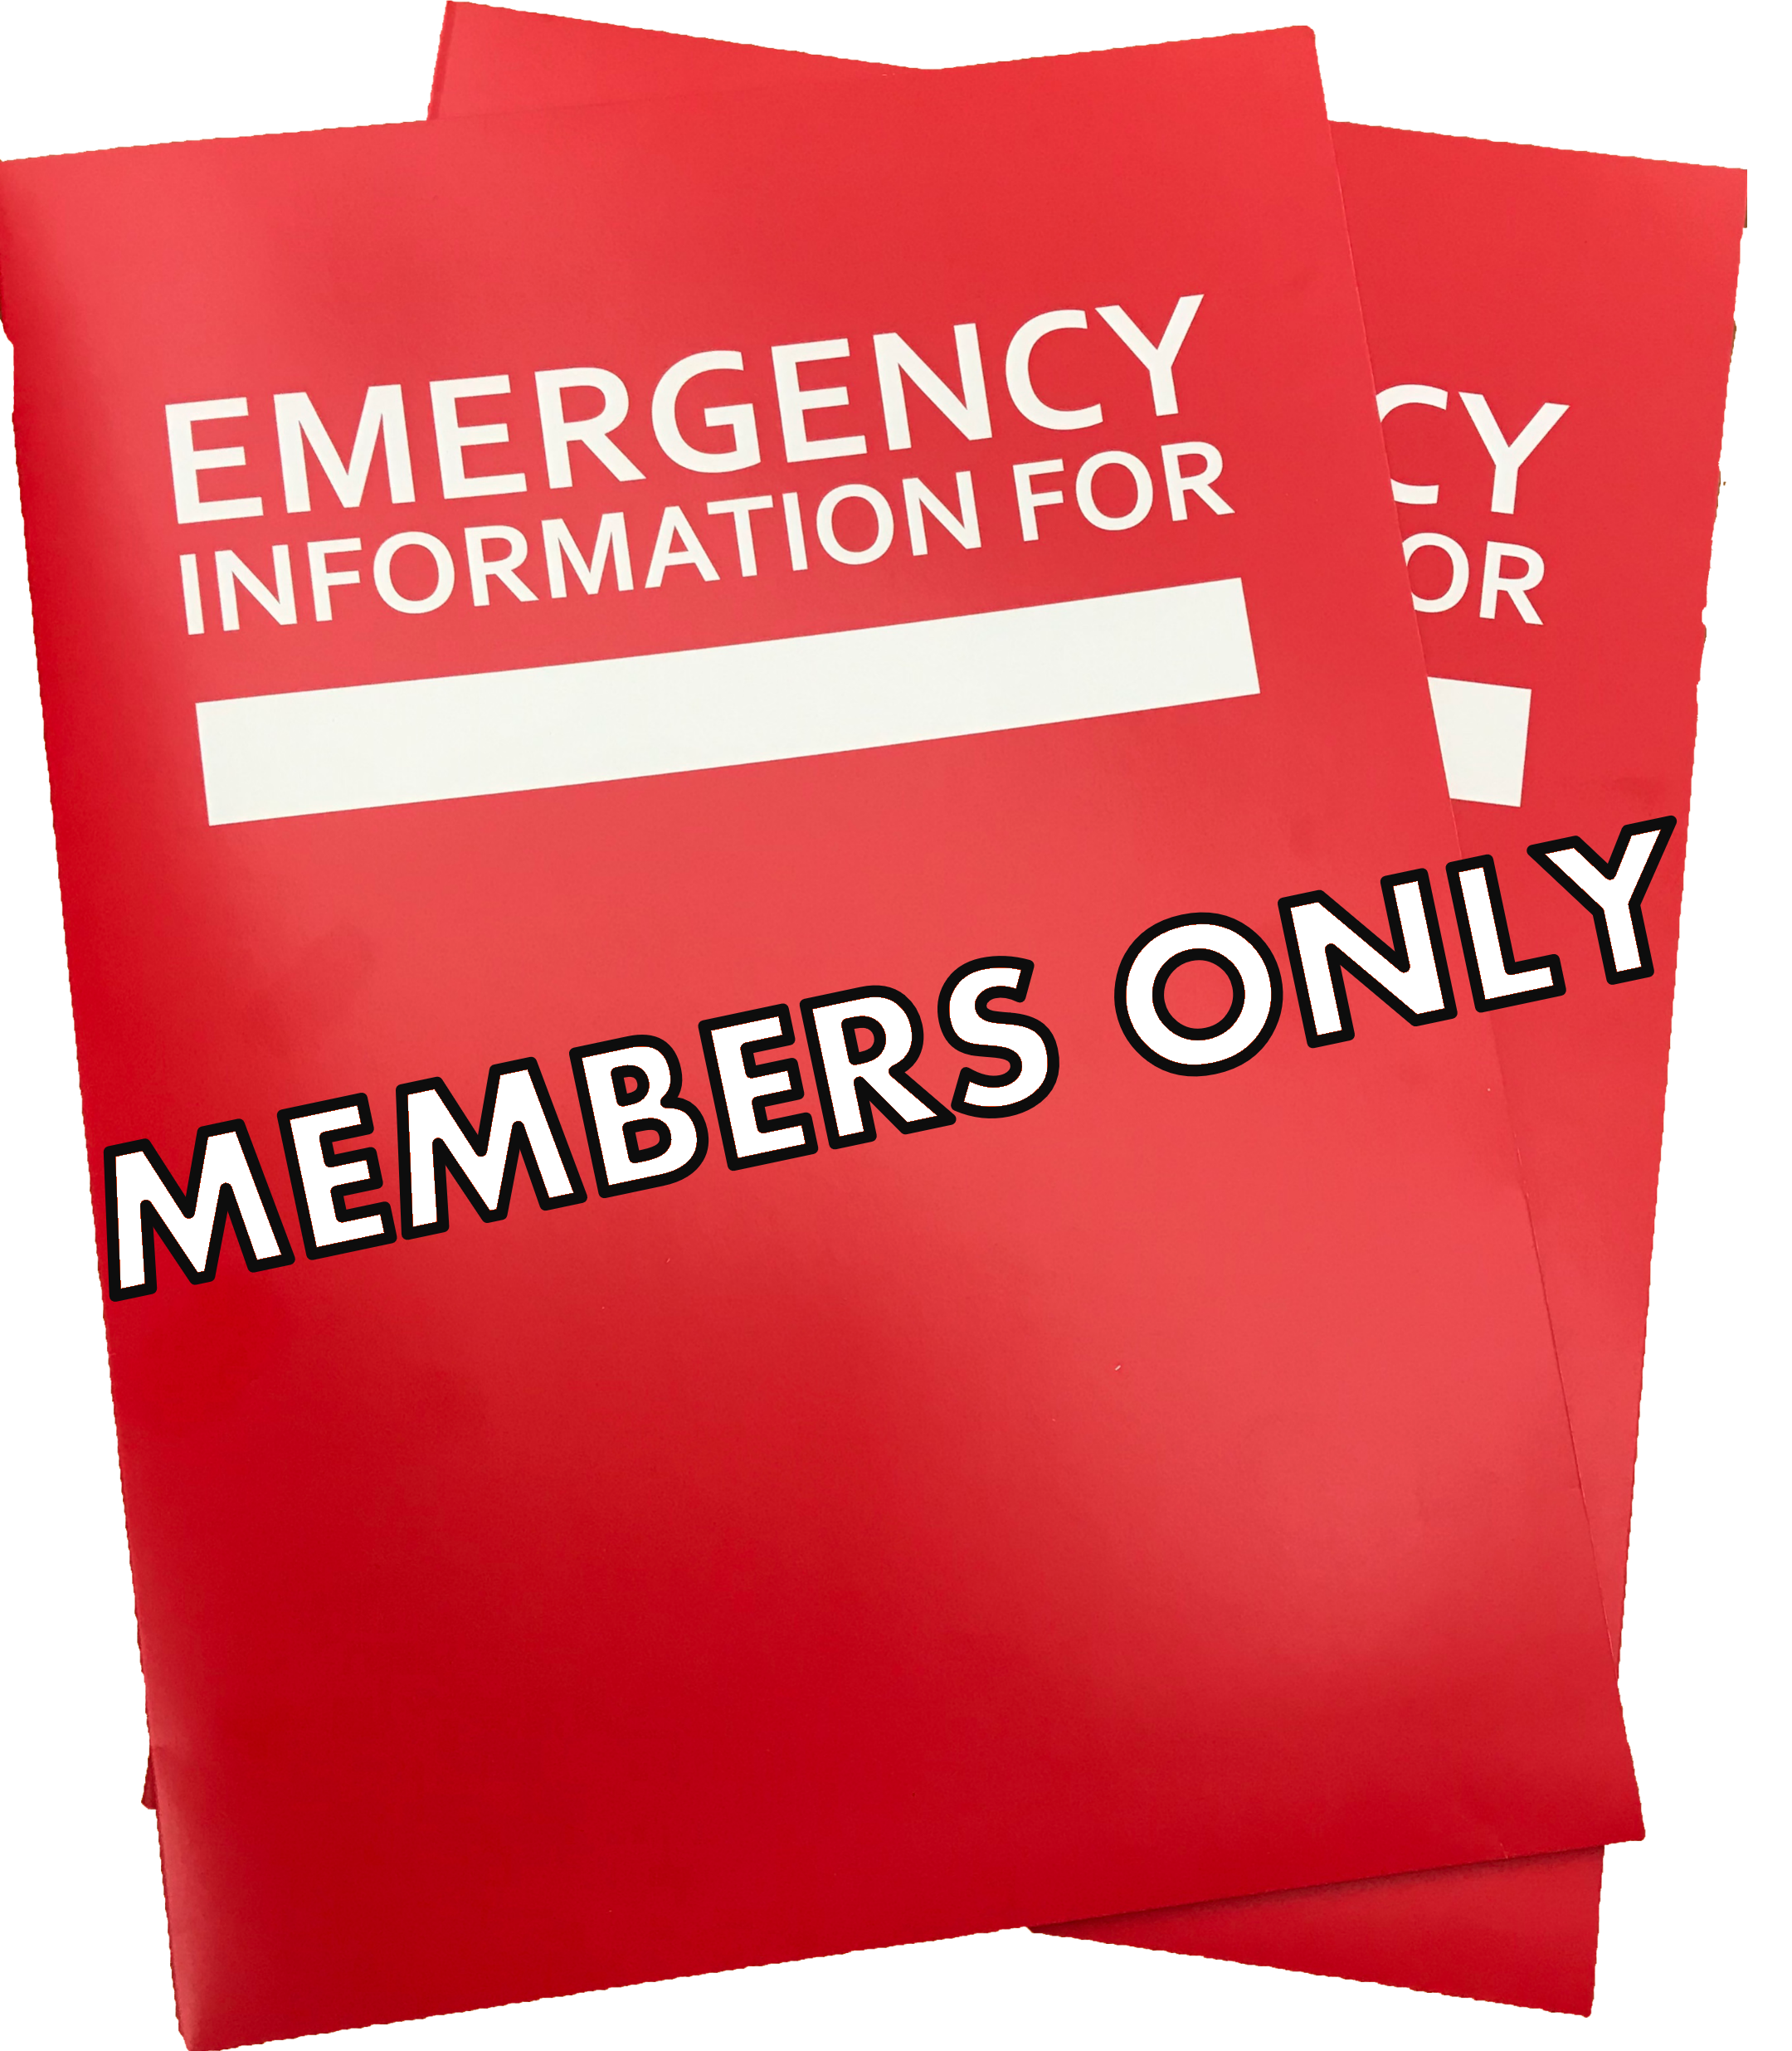 Client Emergency Information Folders